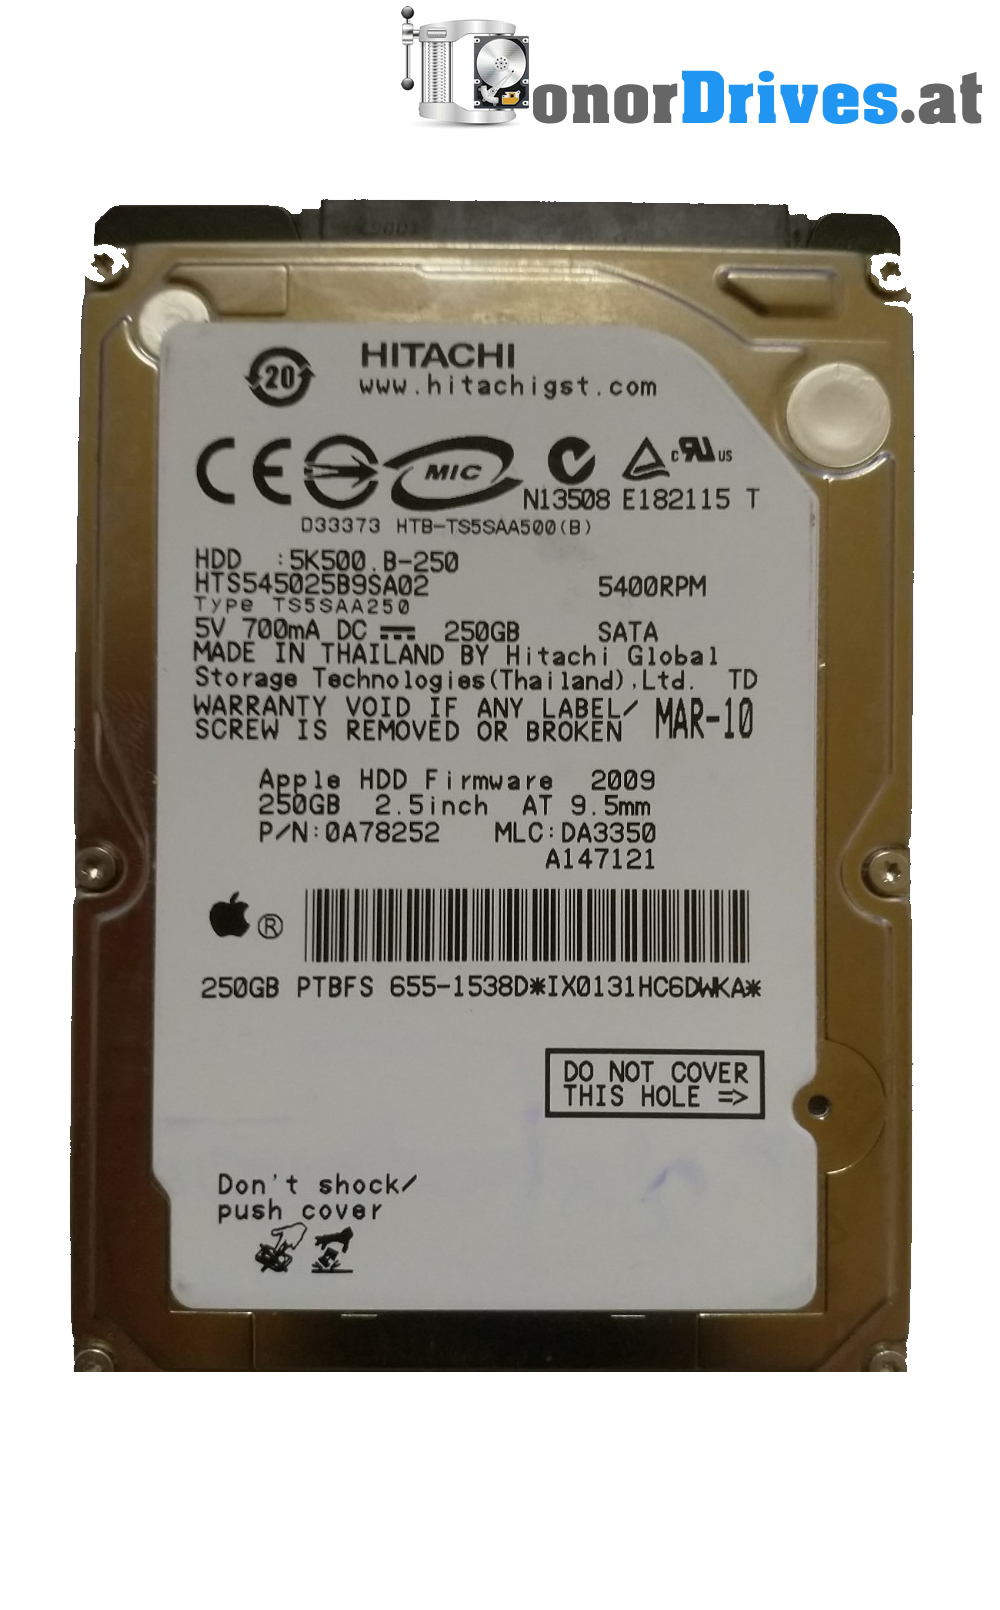 Hitachi HDP725025GLA380- 0A36893 - SATA - 250 GB - Pcb 110 0A90026 01 Rev. 